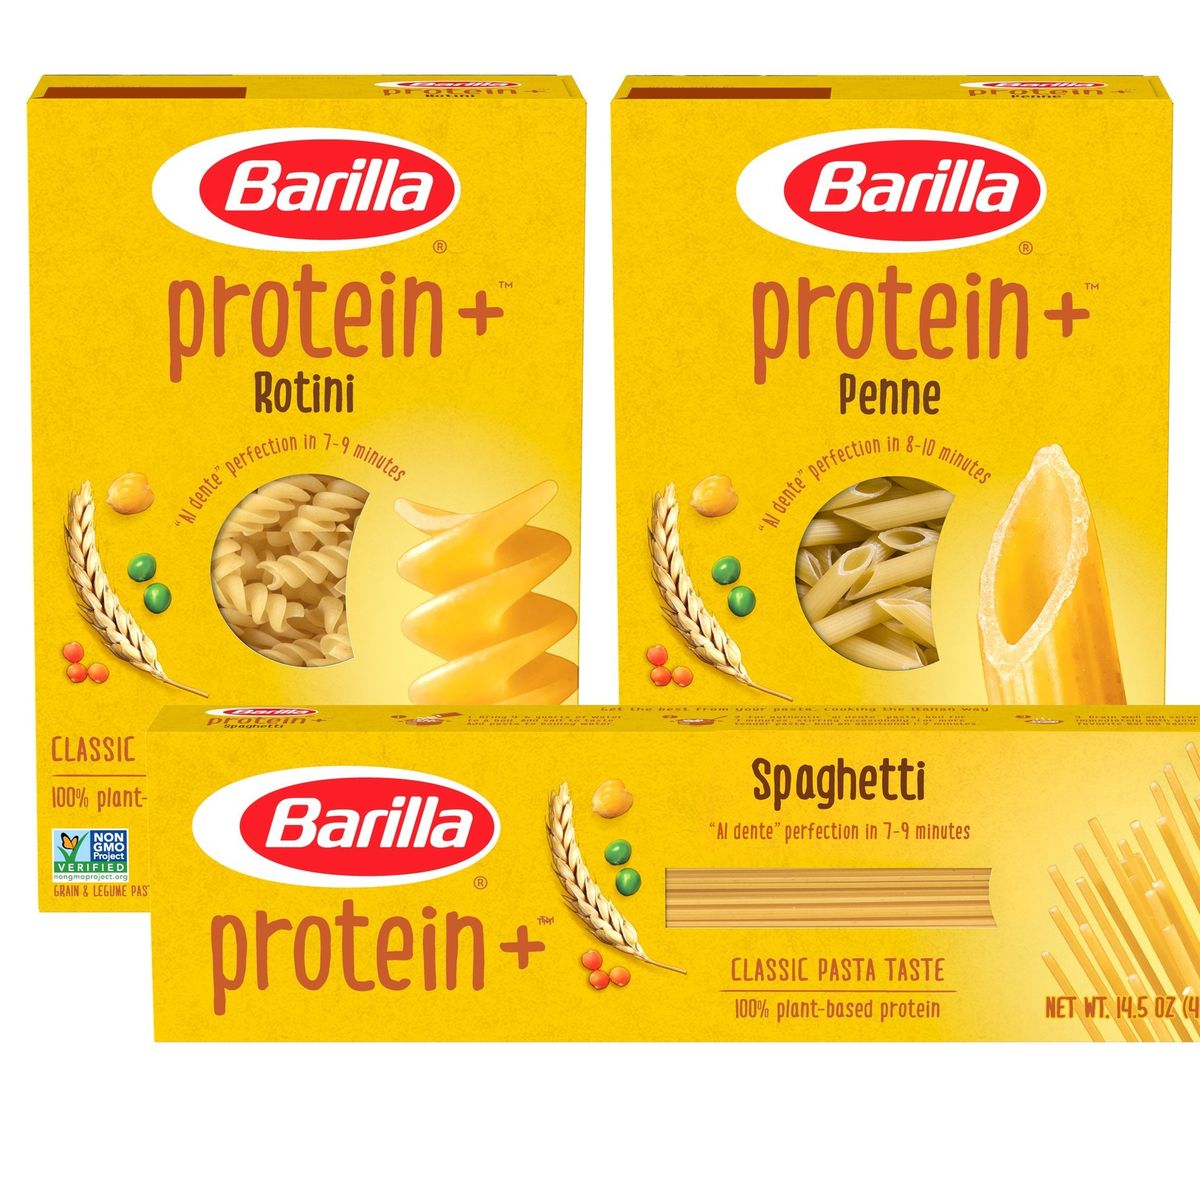 Is Protein+ Now Barilla\'s Vegan Pasta